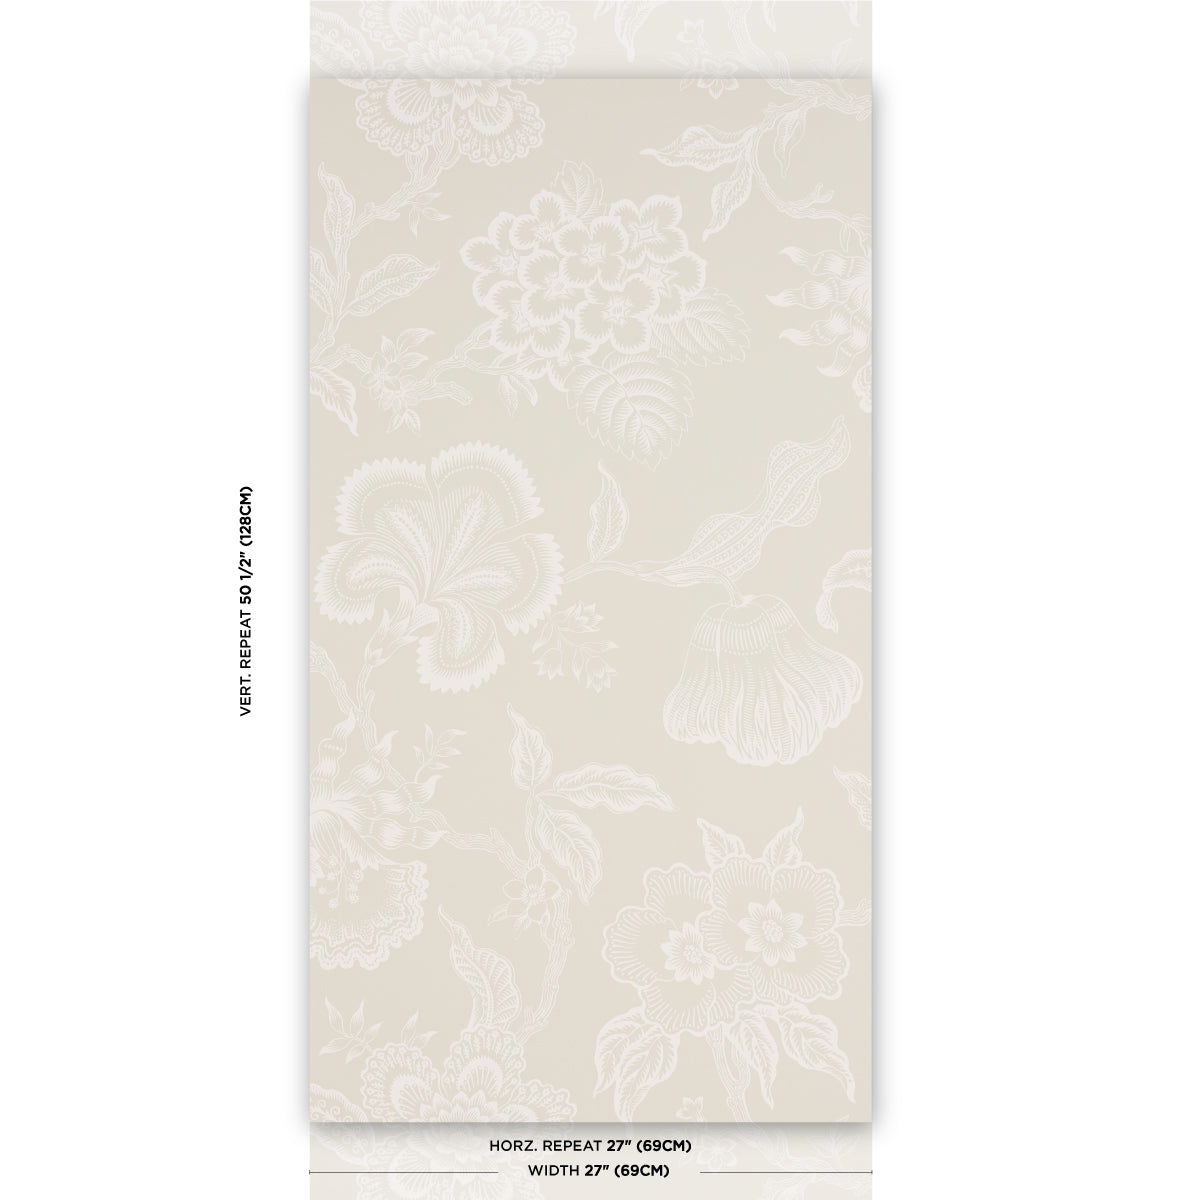 Purchase 5015320 | Hothouse Flowers Silhouette, Cream - Schumacher Wallpaper